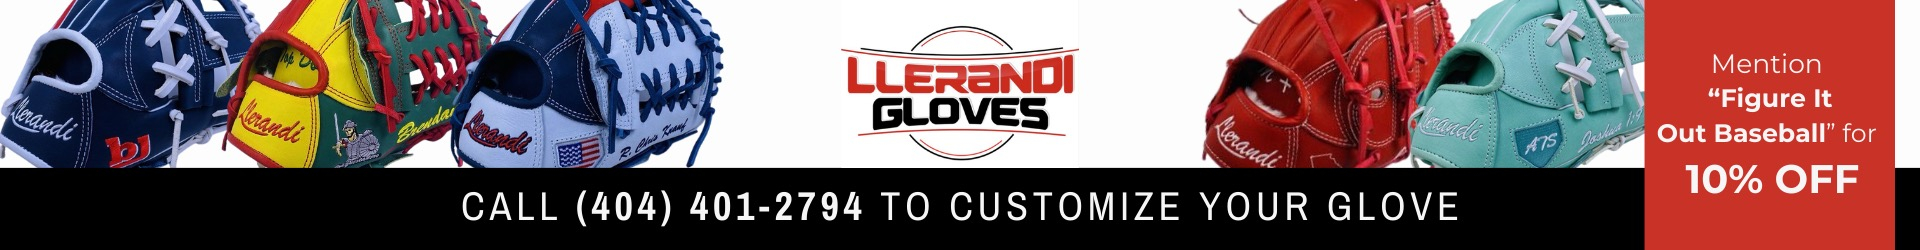 Llerandi Gloves 1